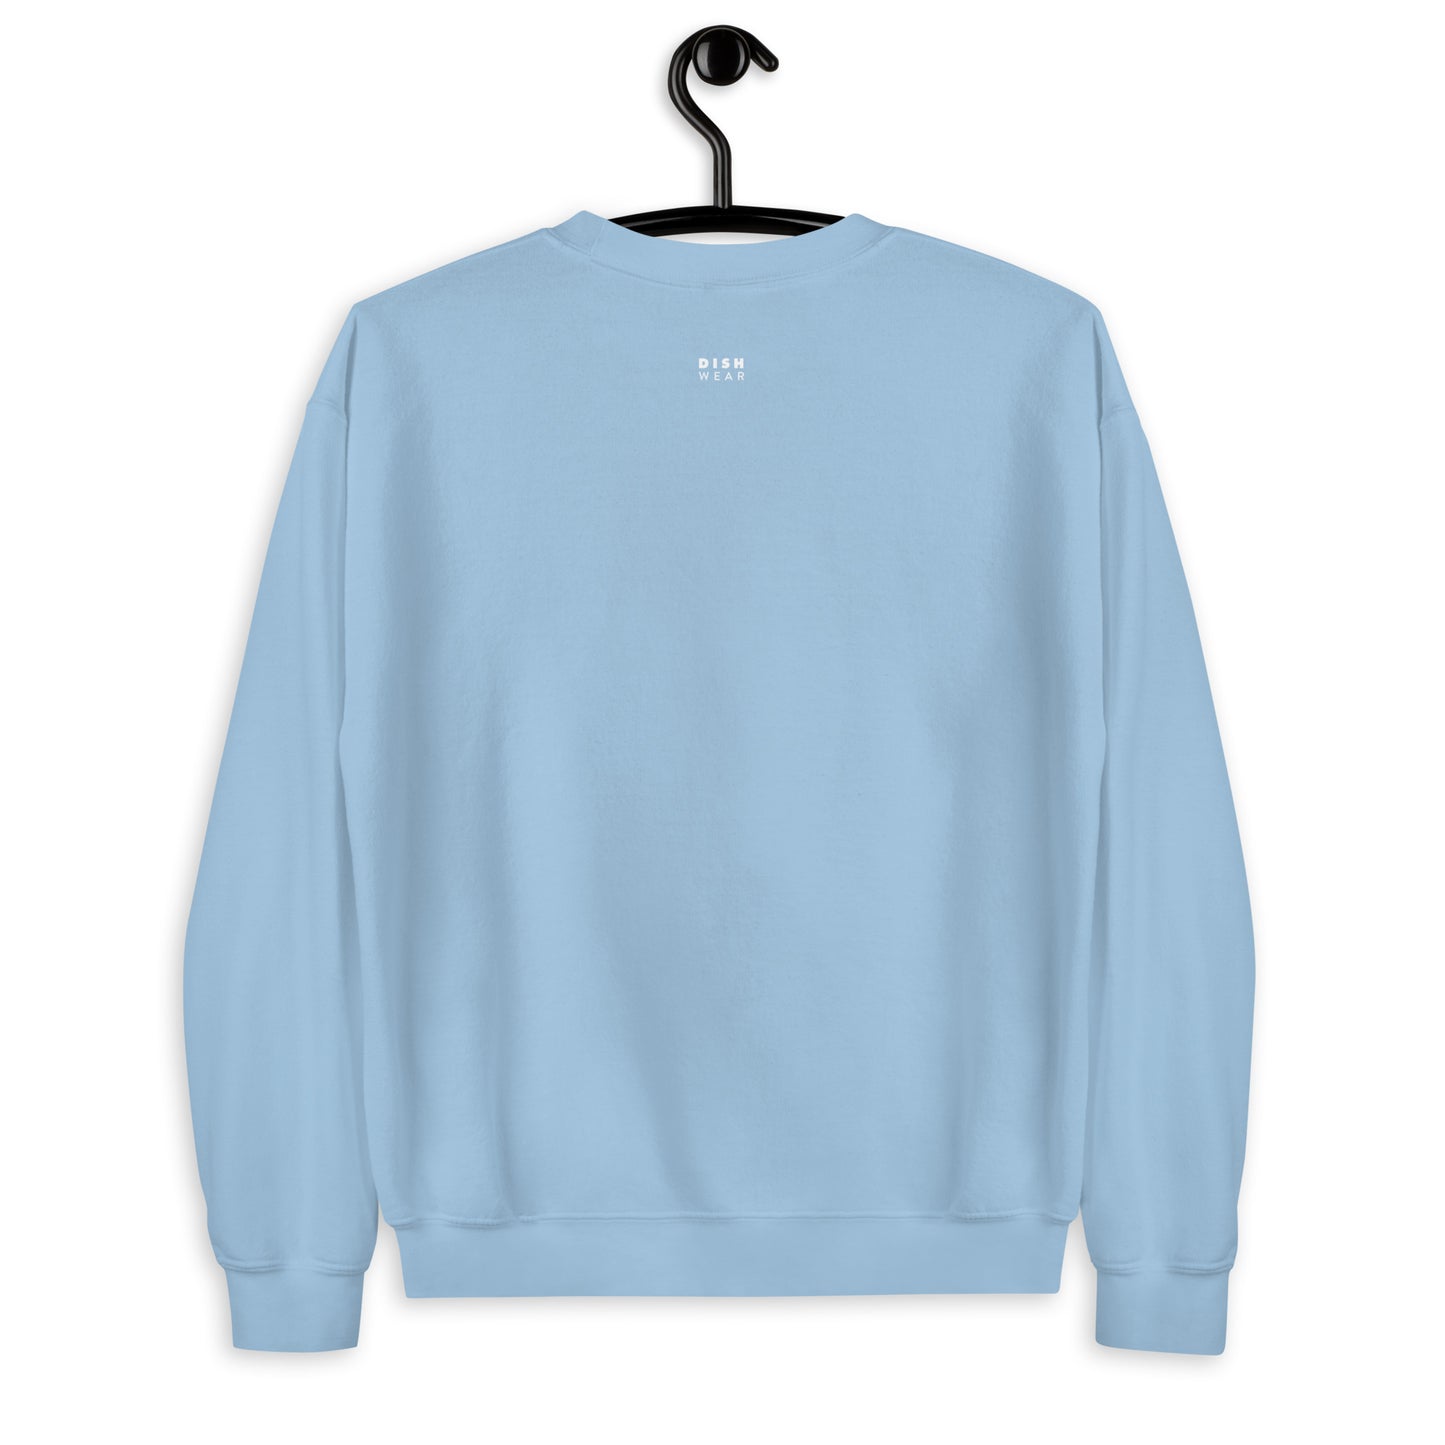 Challah Sweatshirt - Straight Font